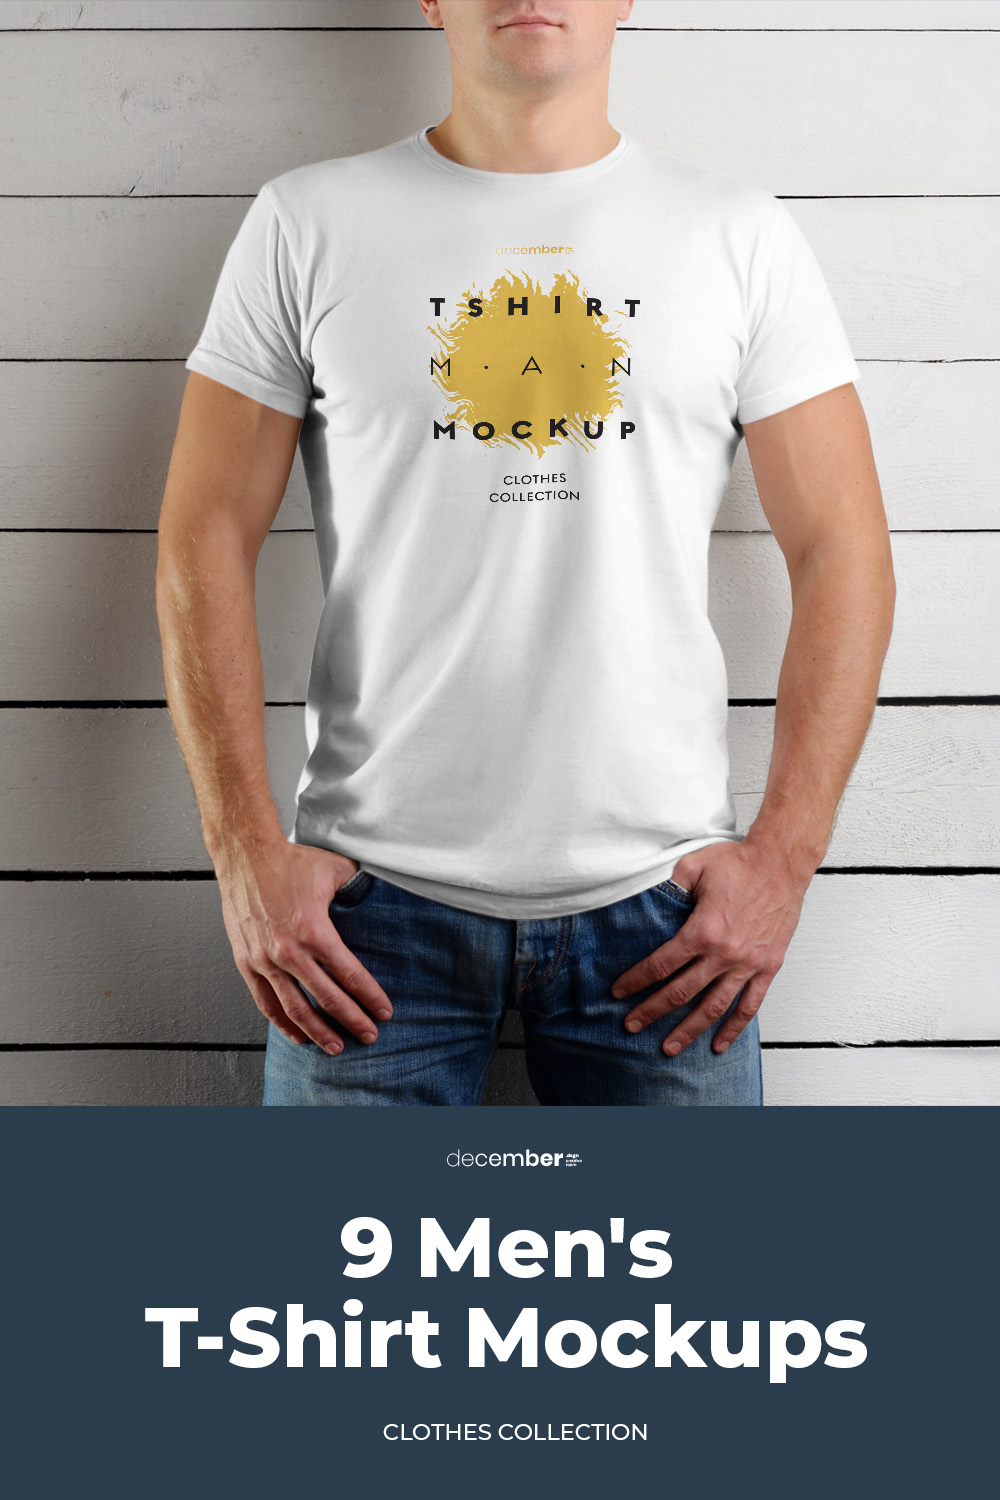 9 Mockup Man T-shirts on Wooden Background pinterest image.